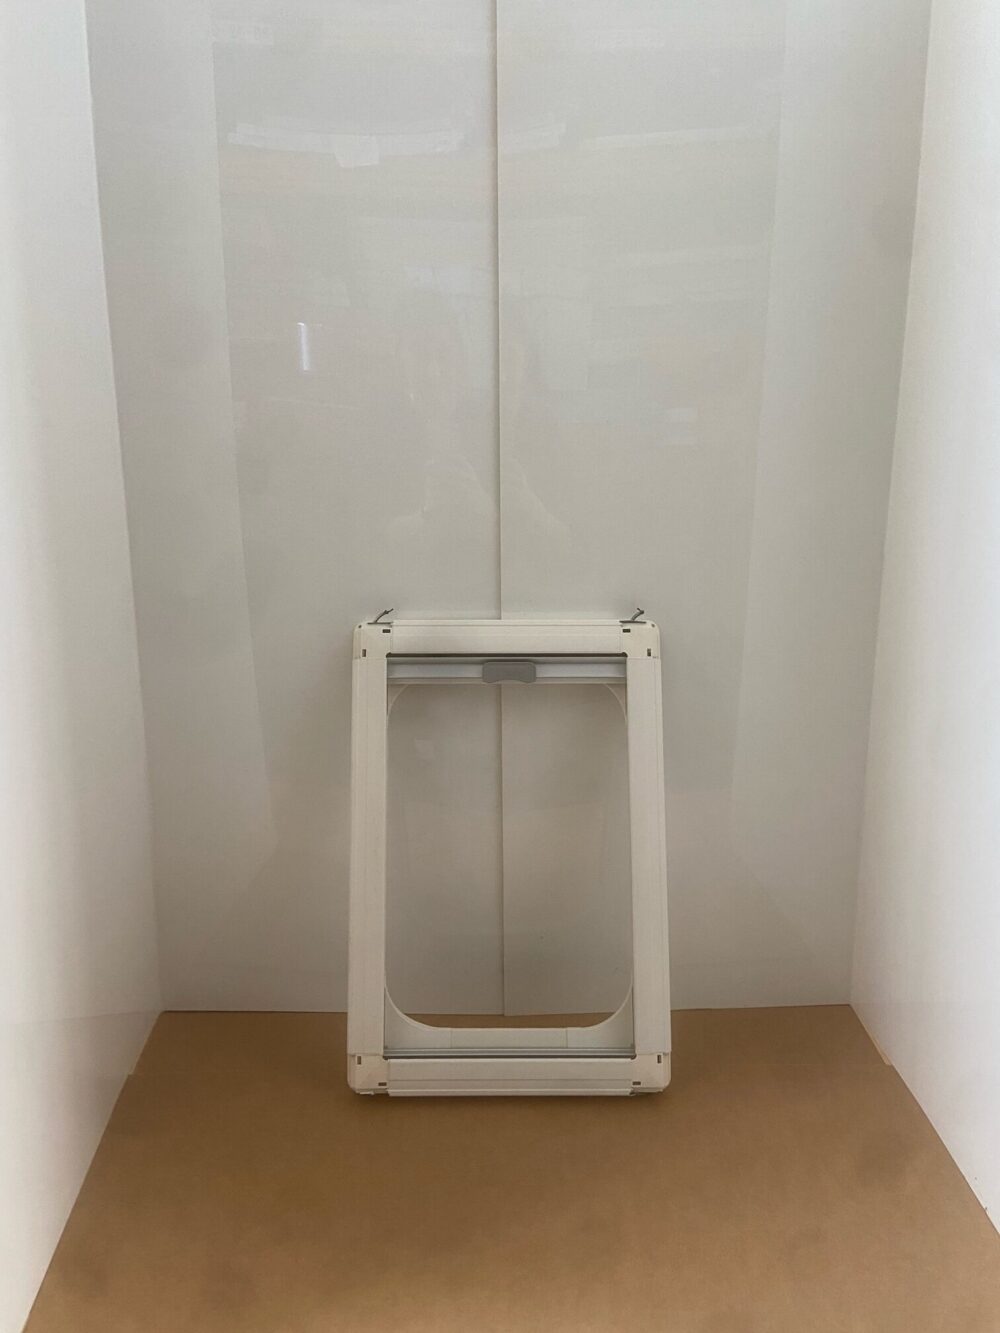 Remis Rahmen inkl. Fliegenschutz + Verdunklung, ca. 51 x 35 cm